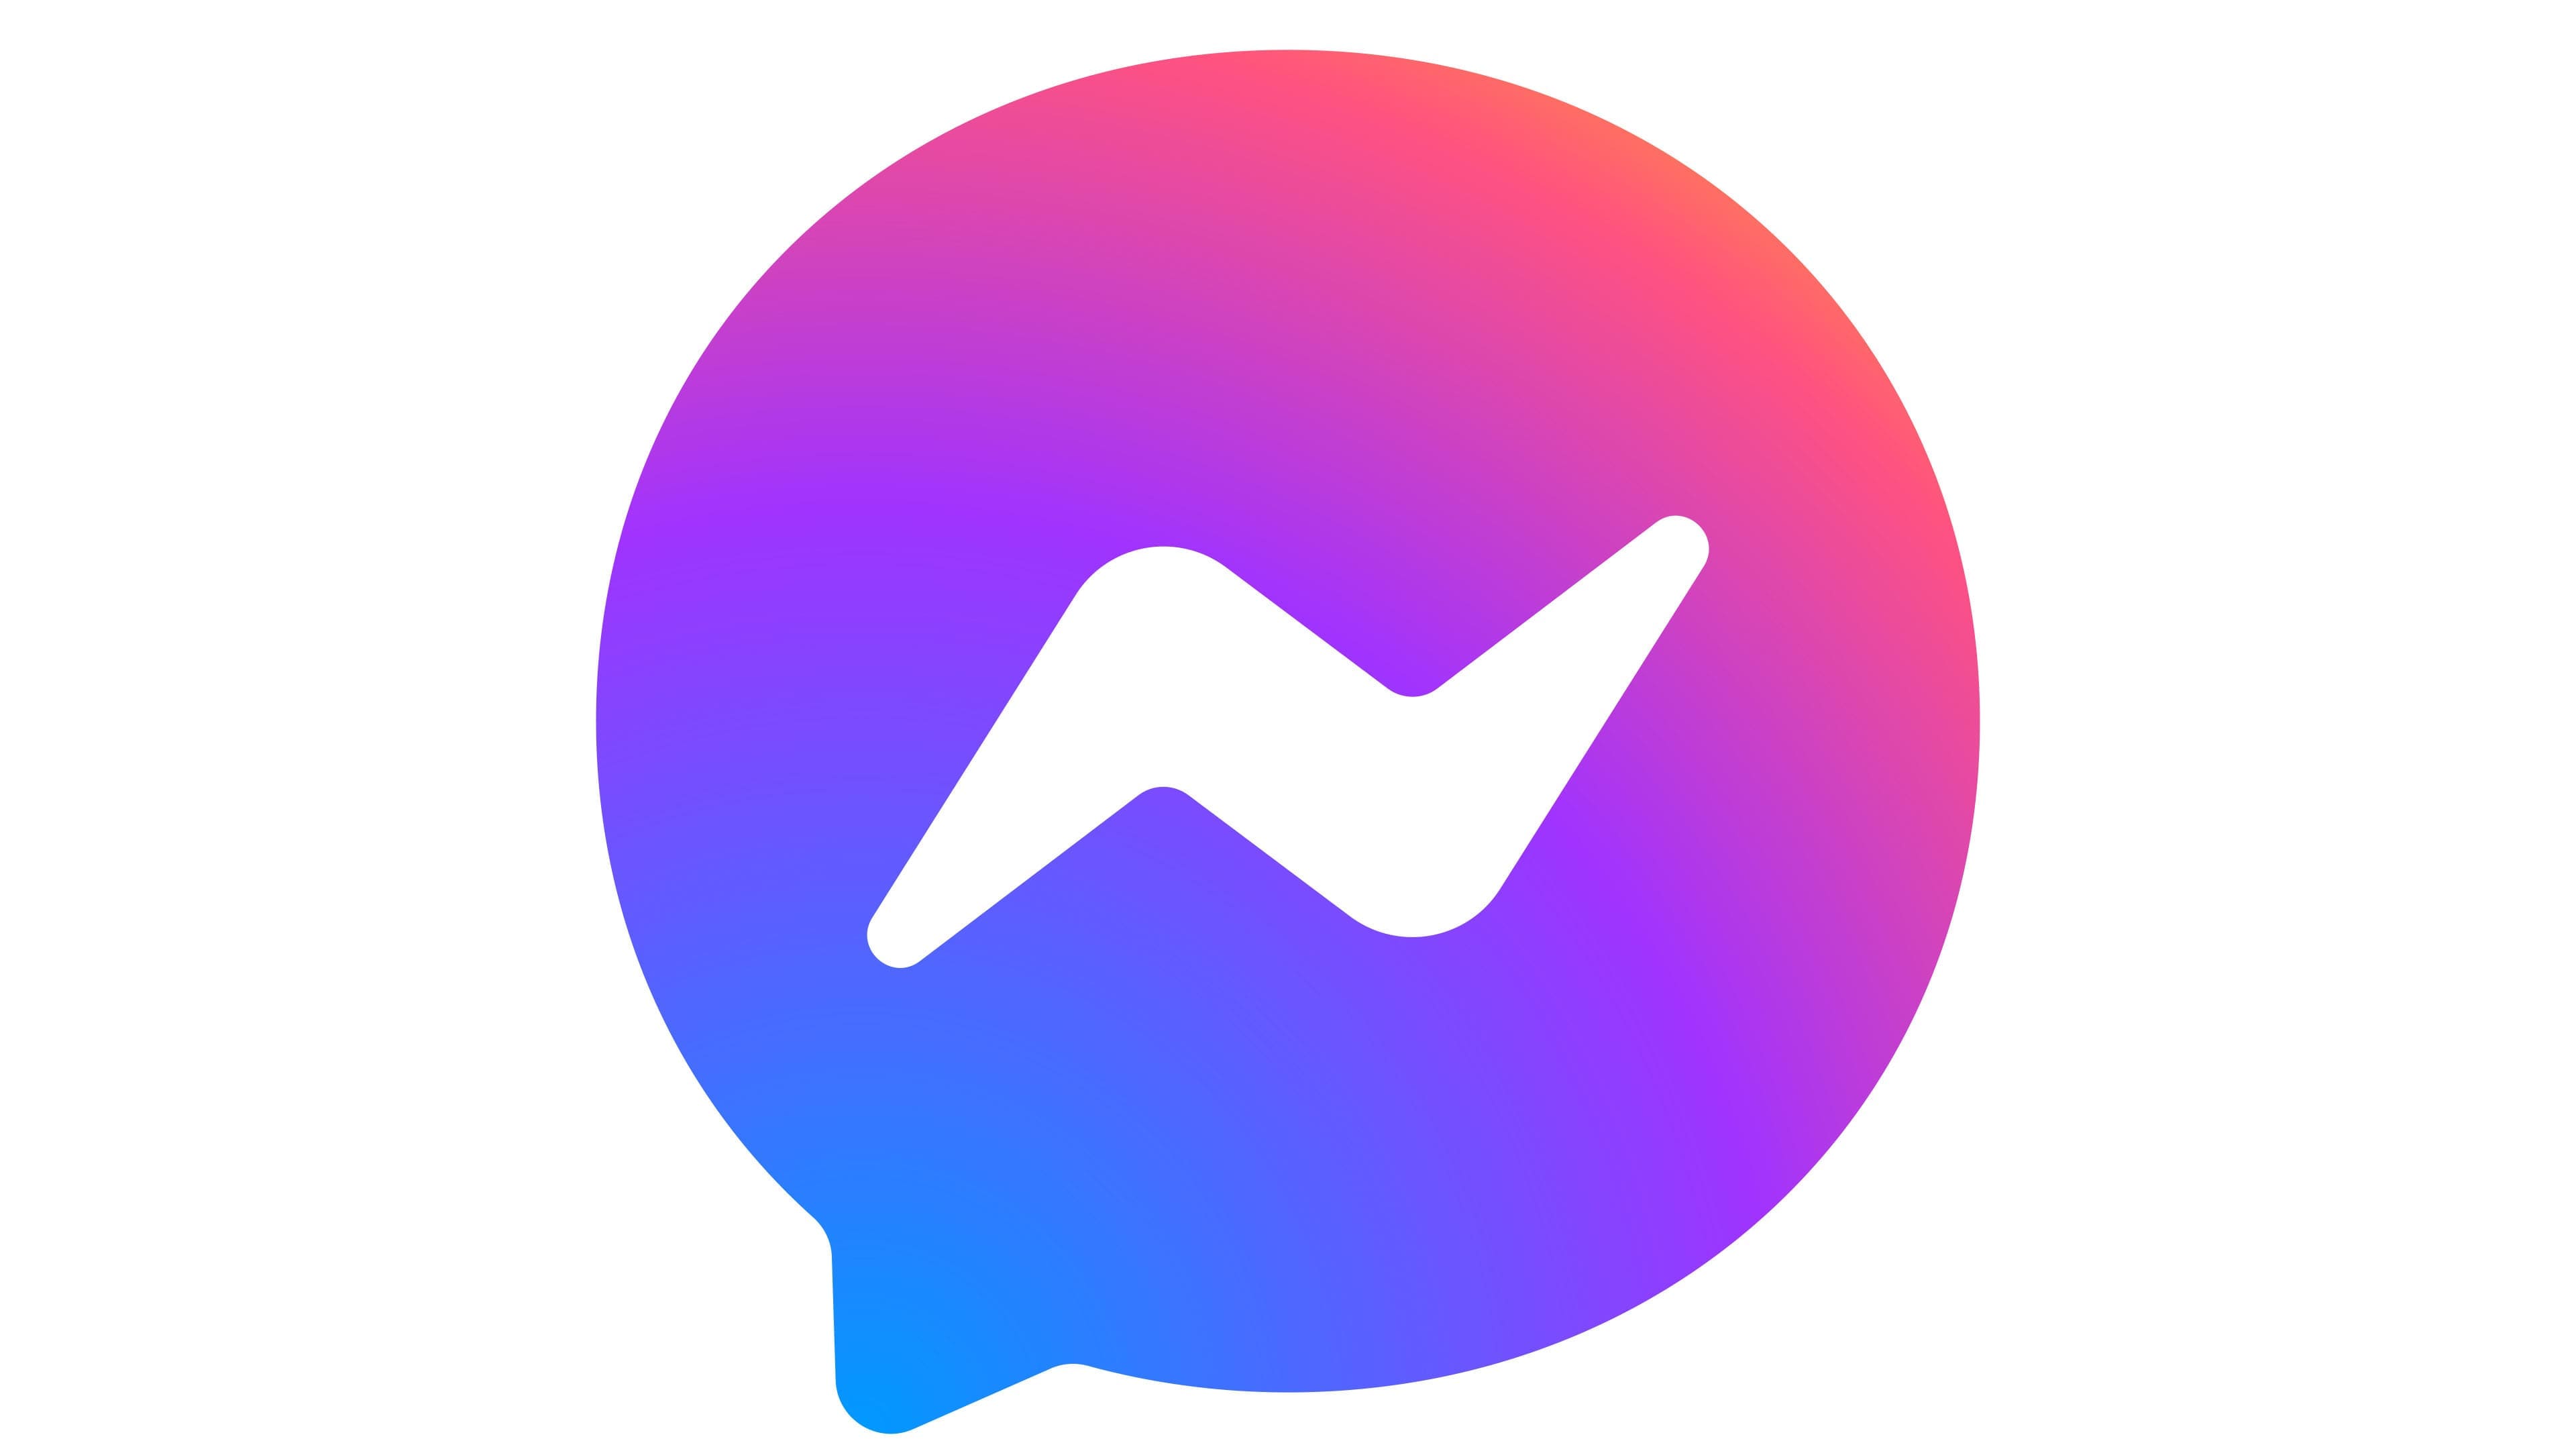 Facebook Messenger Logo, symbol, meaning, history, PNG, brand